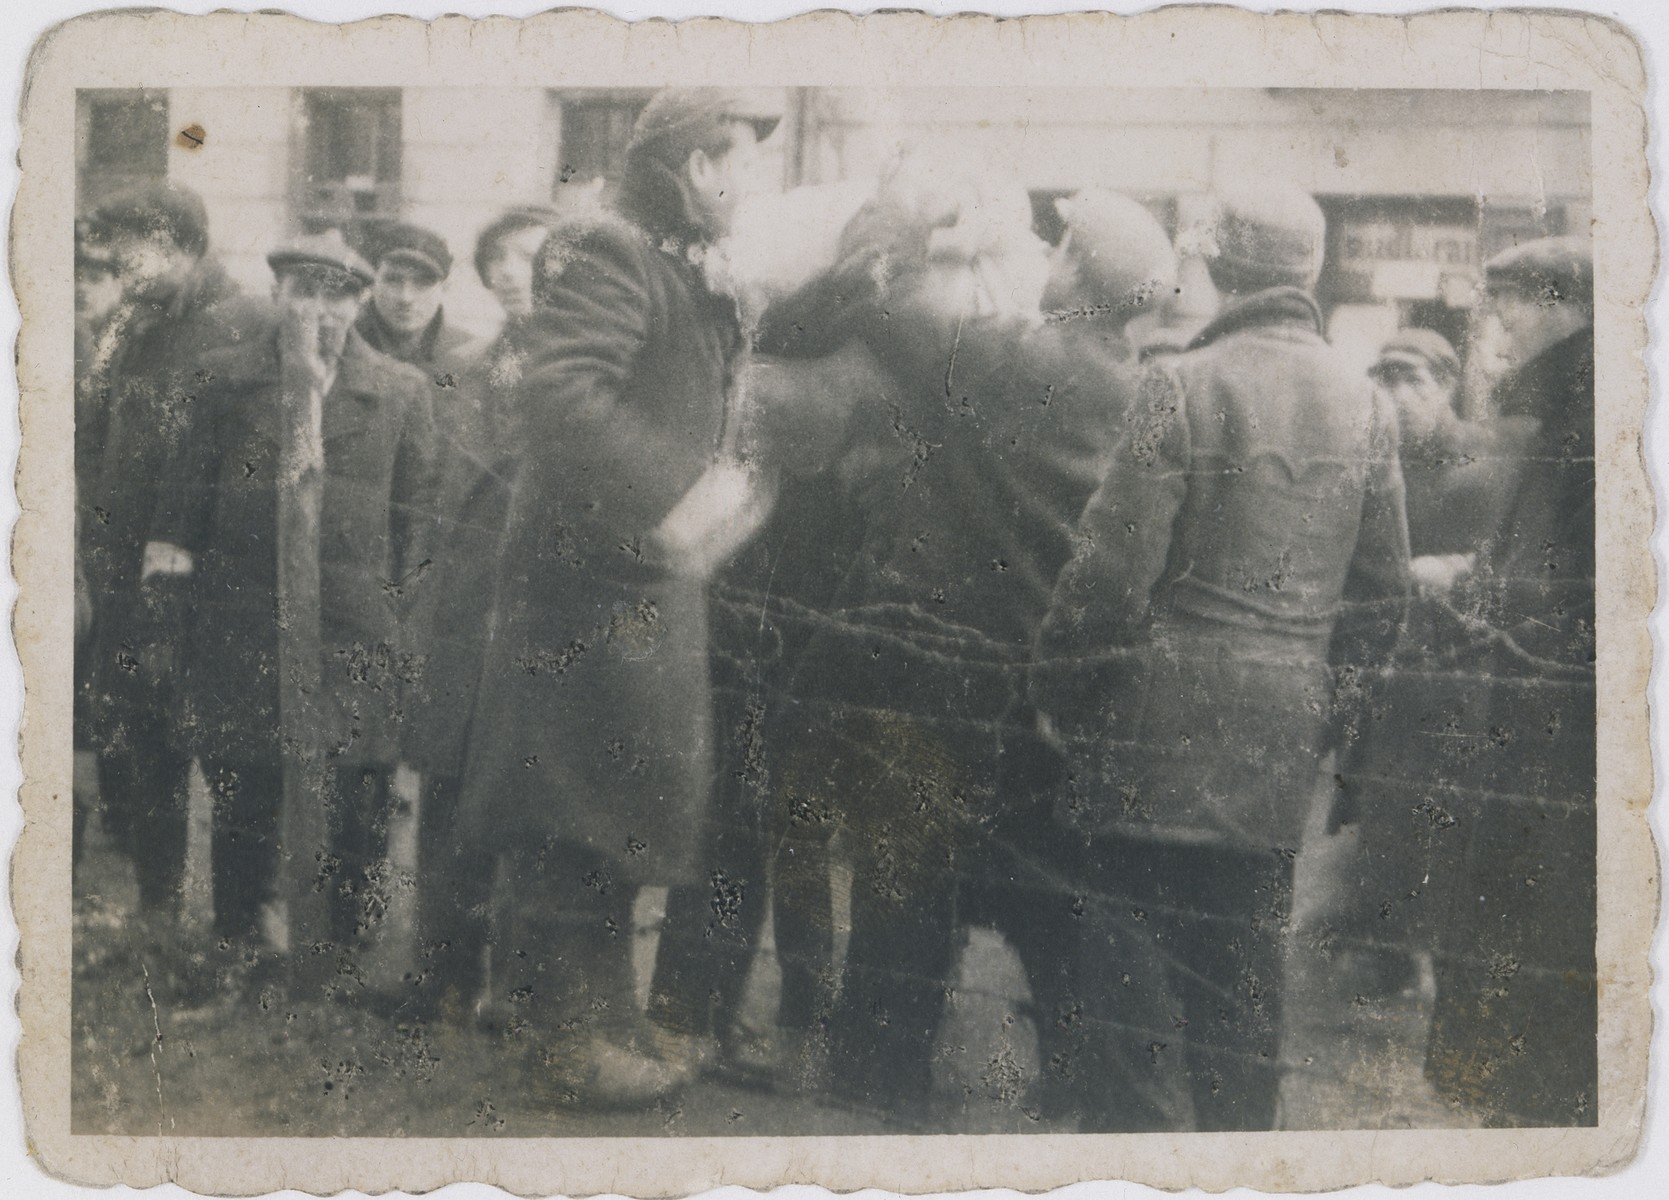 A Polish boy passes smuggled goods to Ajzyk Wierzbicki and Krawczyk in the Warsaw ghetto through a fence on Krochmalna Street.